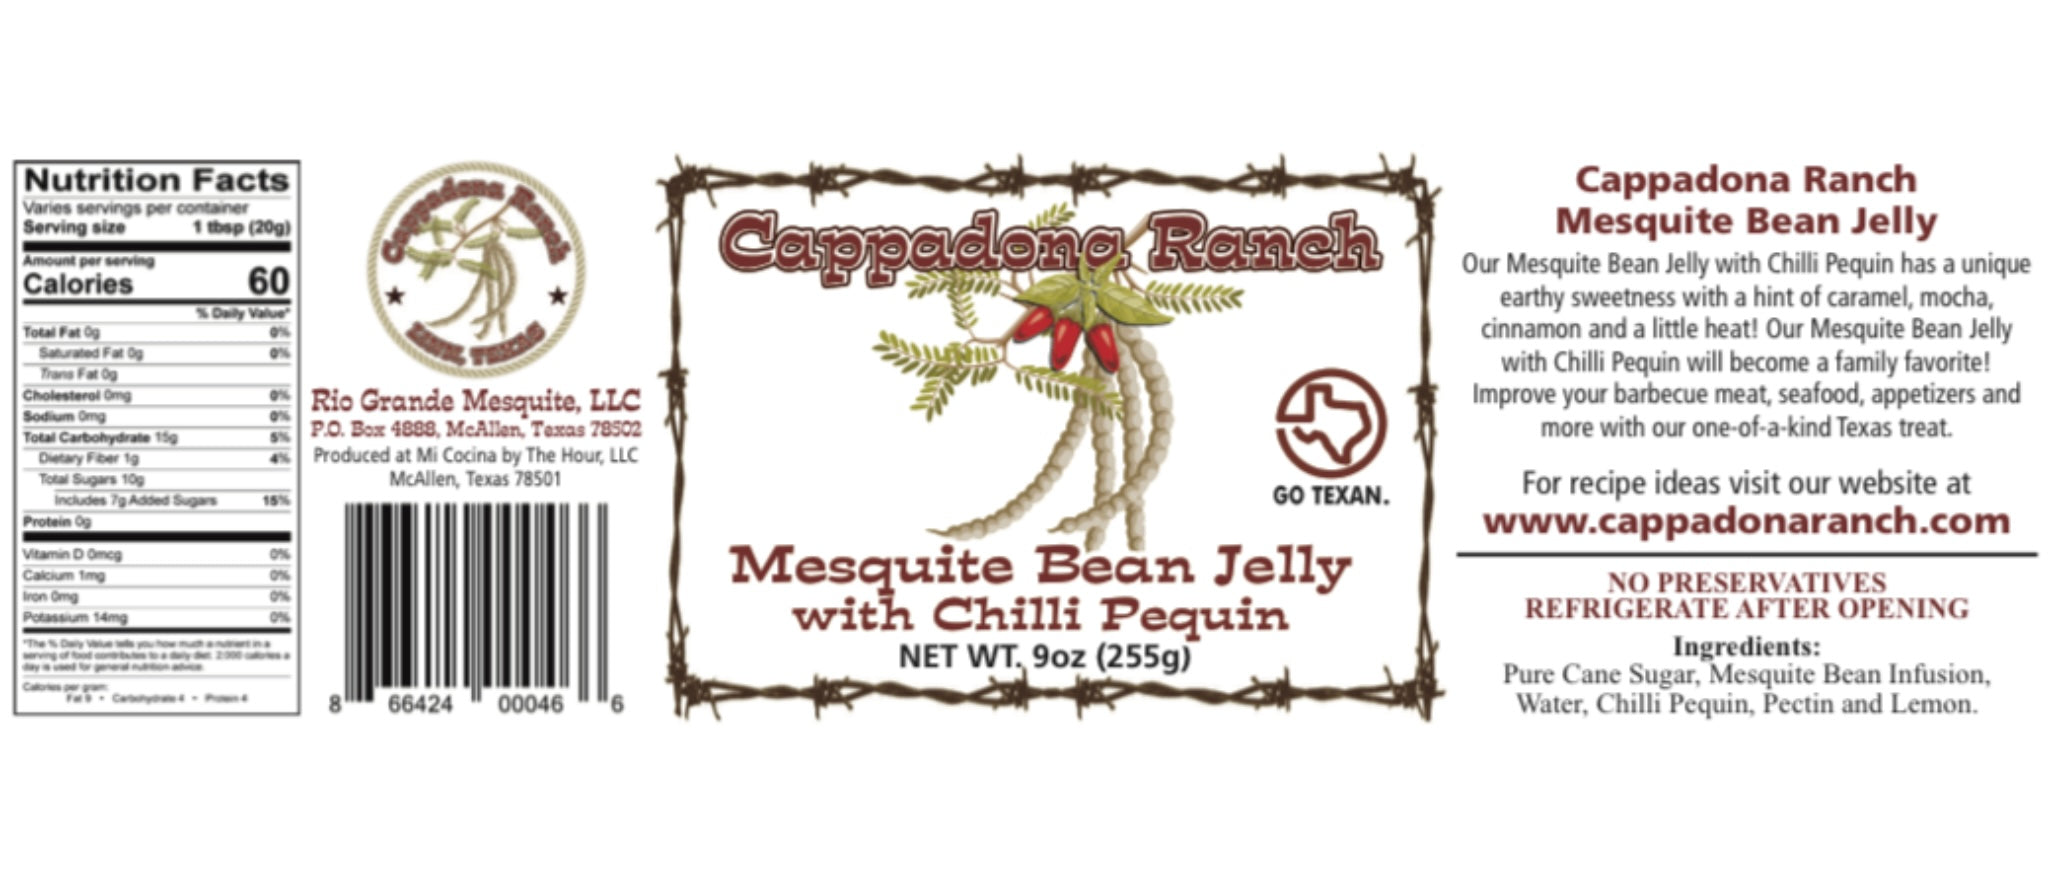 Cappadona Ranch Mesquite Bean Jelly w/Chilli Pequin